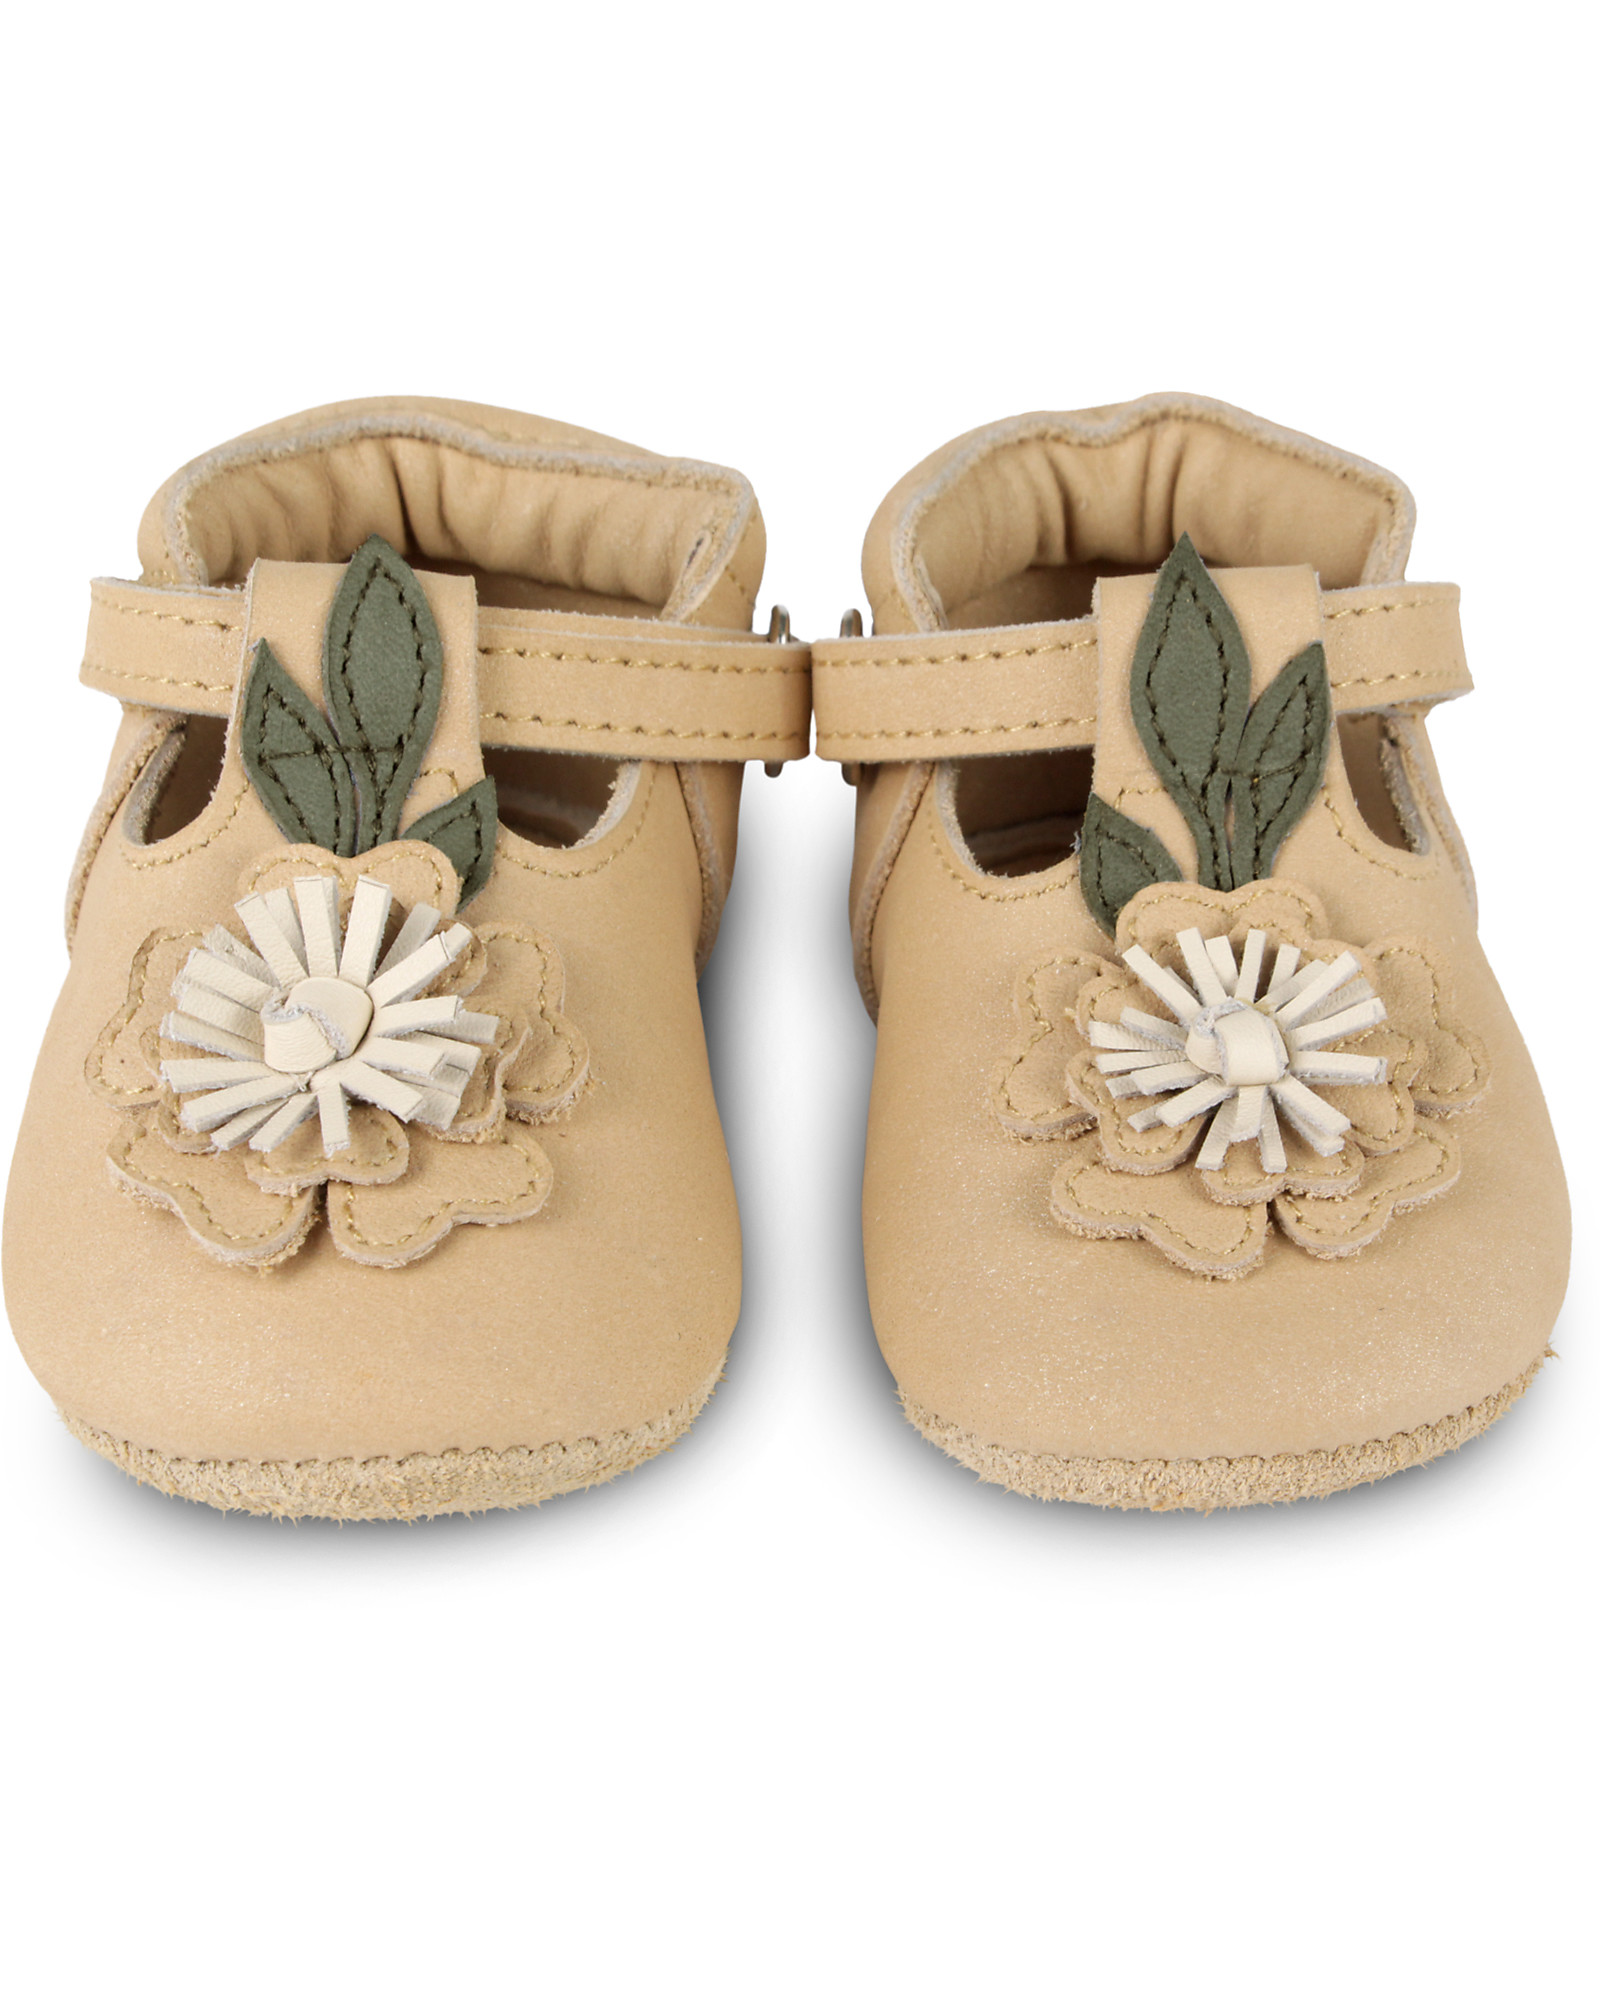 https://data.family-nation.com/imgprodotto/donsje-heidi-nubuck-leather-baby-shoes-buttercup-gold-metallic-velcro-fastening-strap-sandals_464075_zoom.jpg